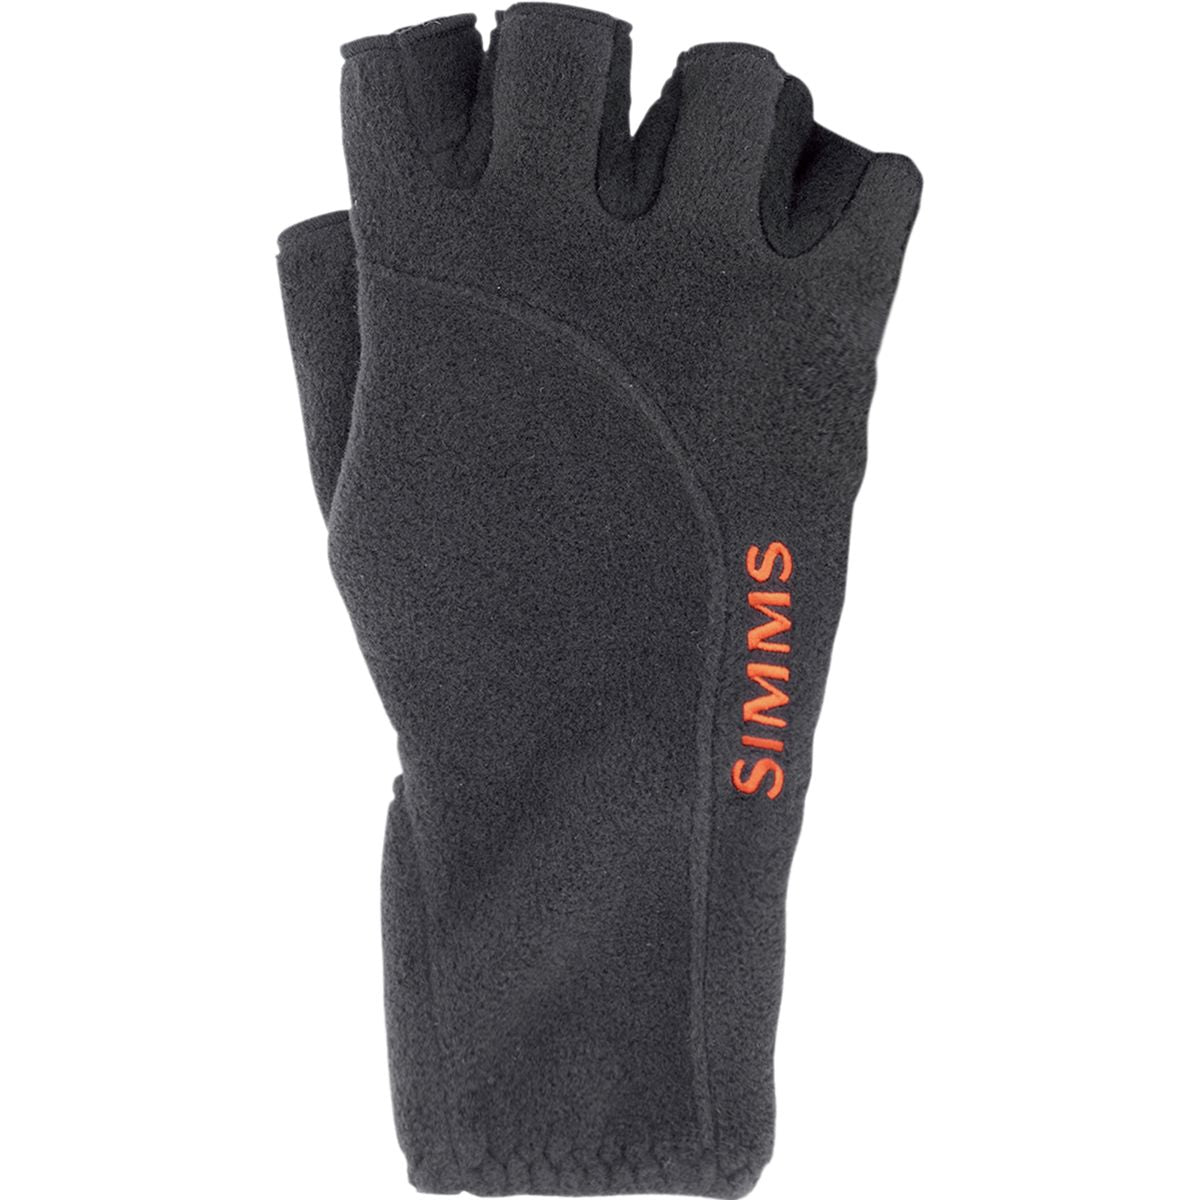 Simms Headwaters Glove Half Fingers